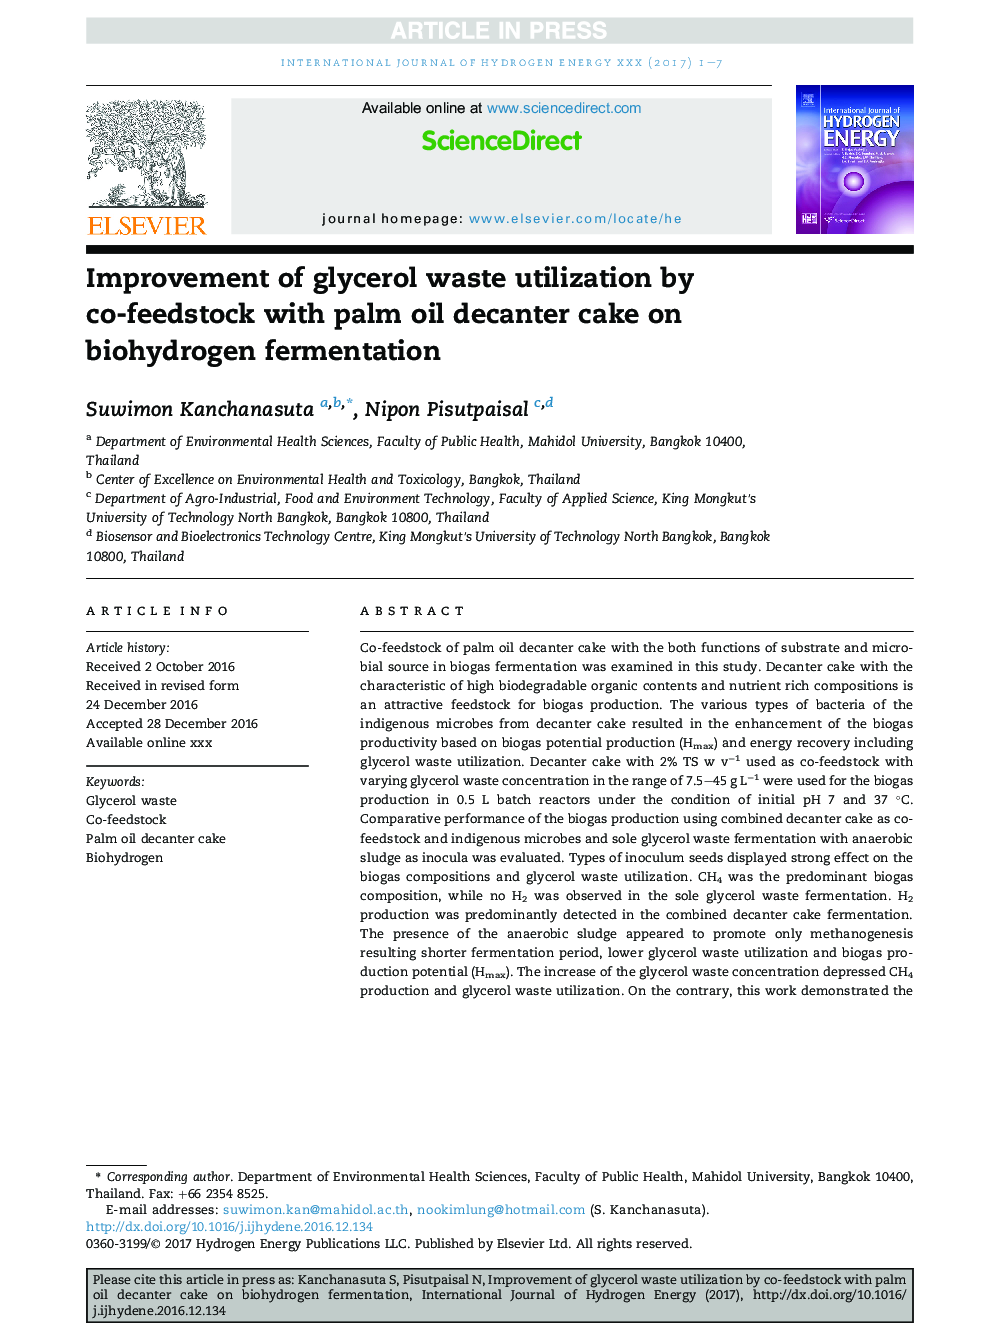 Improvement of glycerol waste utilization by co-feedstock with palm oil decanter cake on biohydrogen fermentation